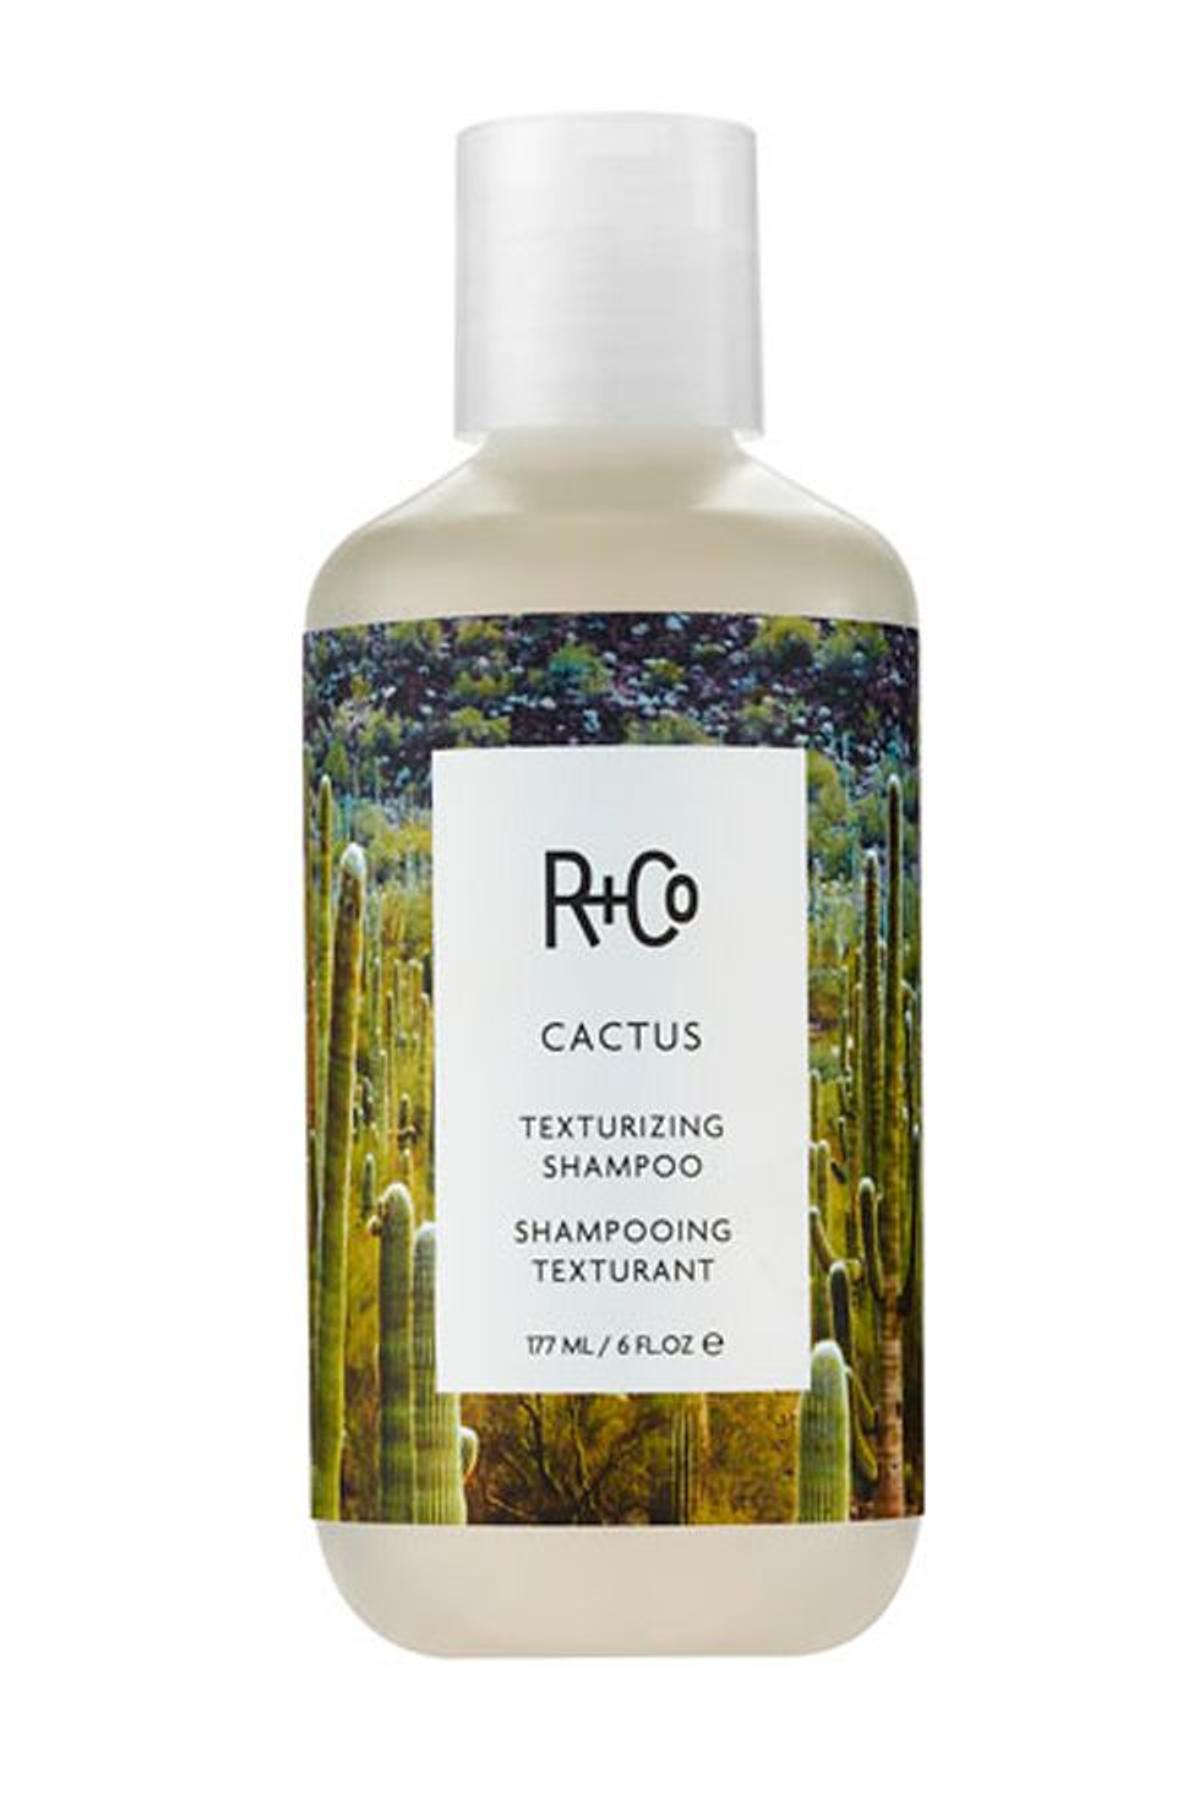 Productos con cactus: champú de R+Co